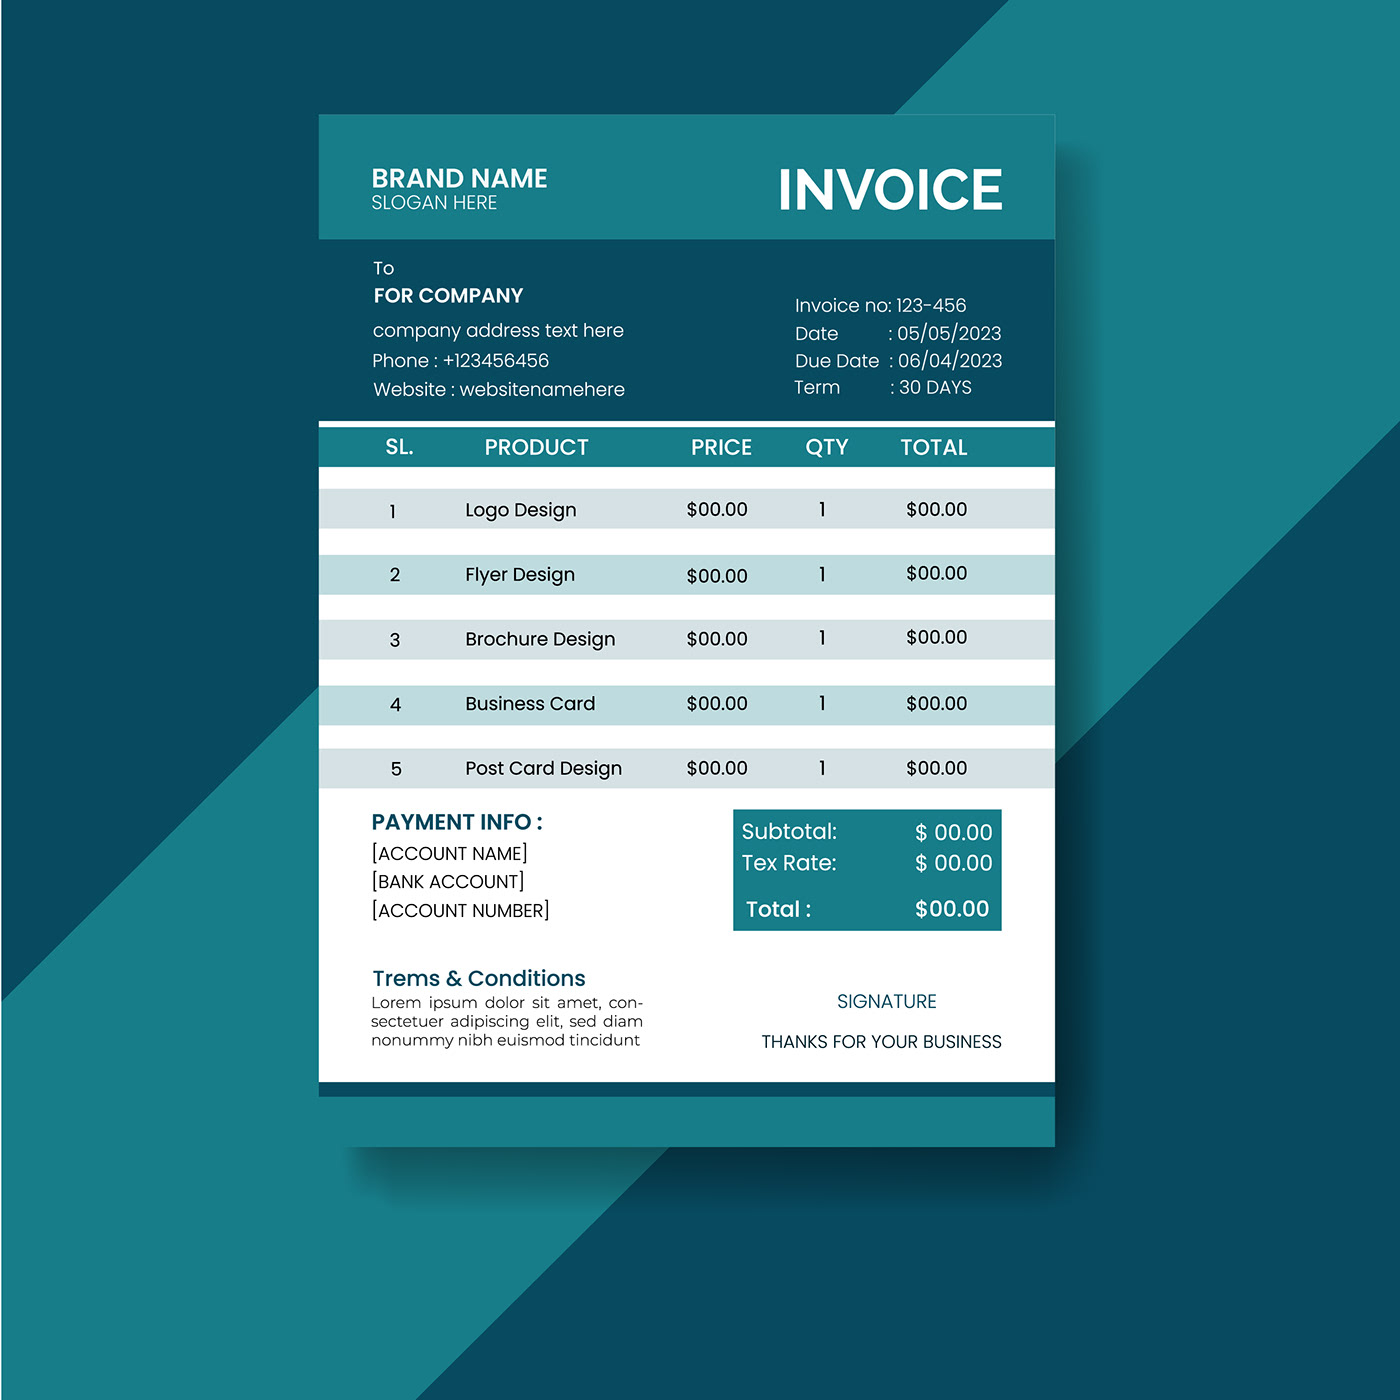 text invoice Invoice Template Invoice Design invoices bill corporate business presentation corporate invoice